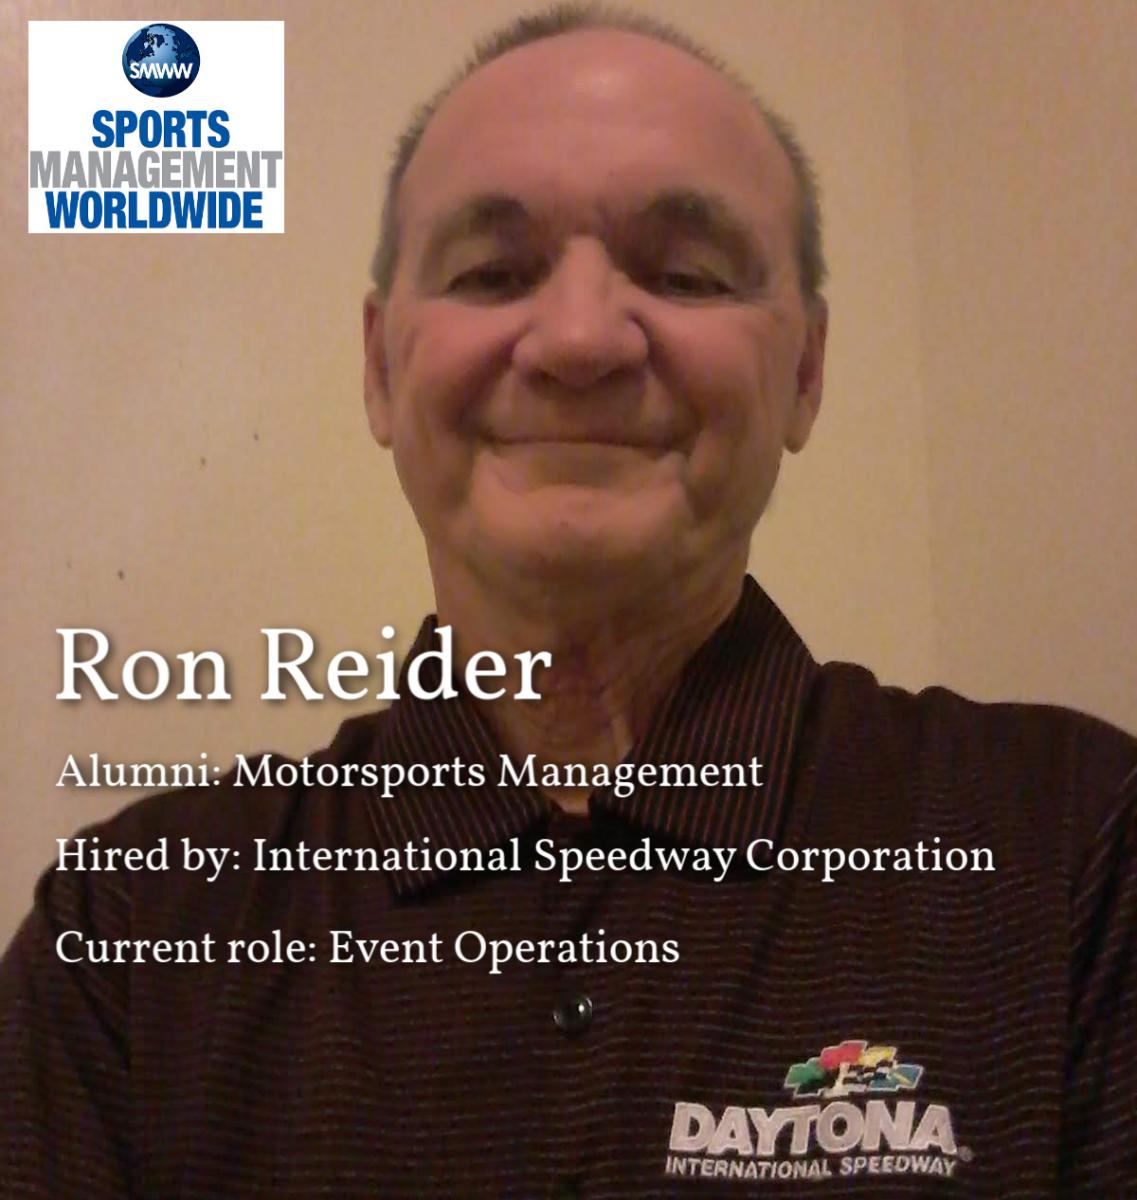 #SMWWsuccess Ron Reider joins International Speedway Corporation